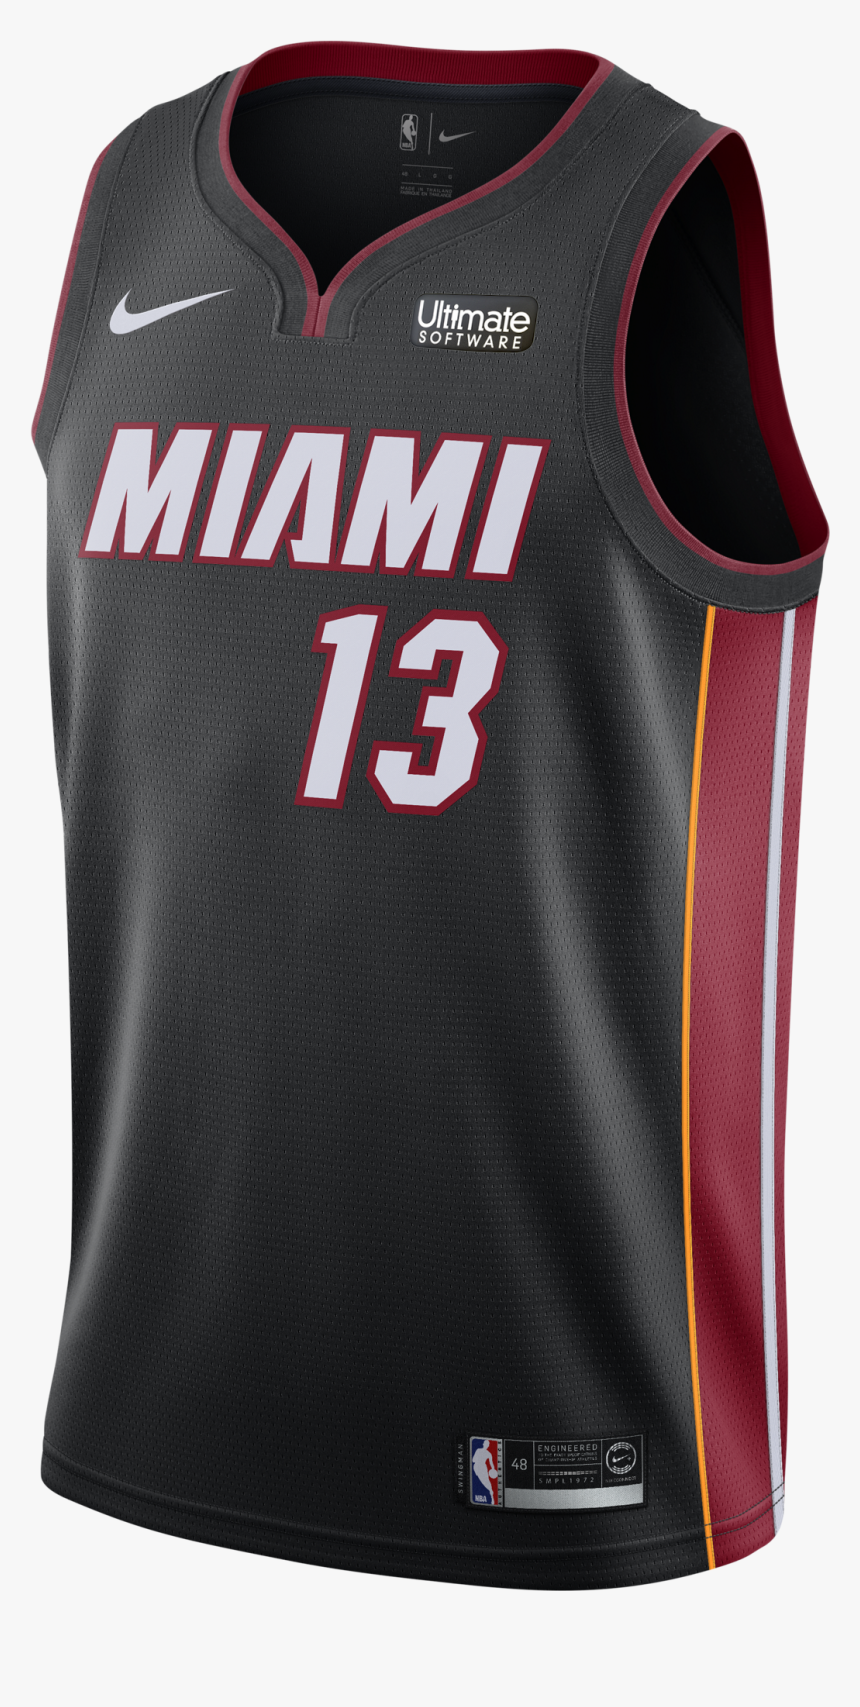 Tyler Herro Nike Icon Black Swingman Jersey - New Miami Heat Jersey, HD Png Download, Free Download